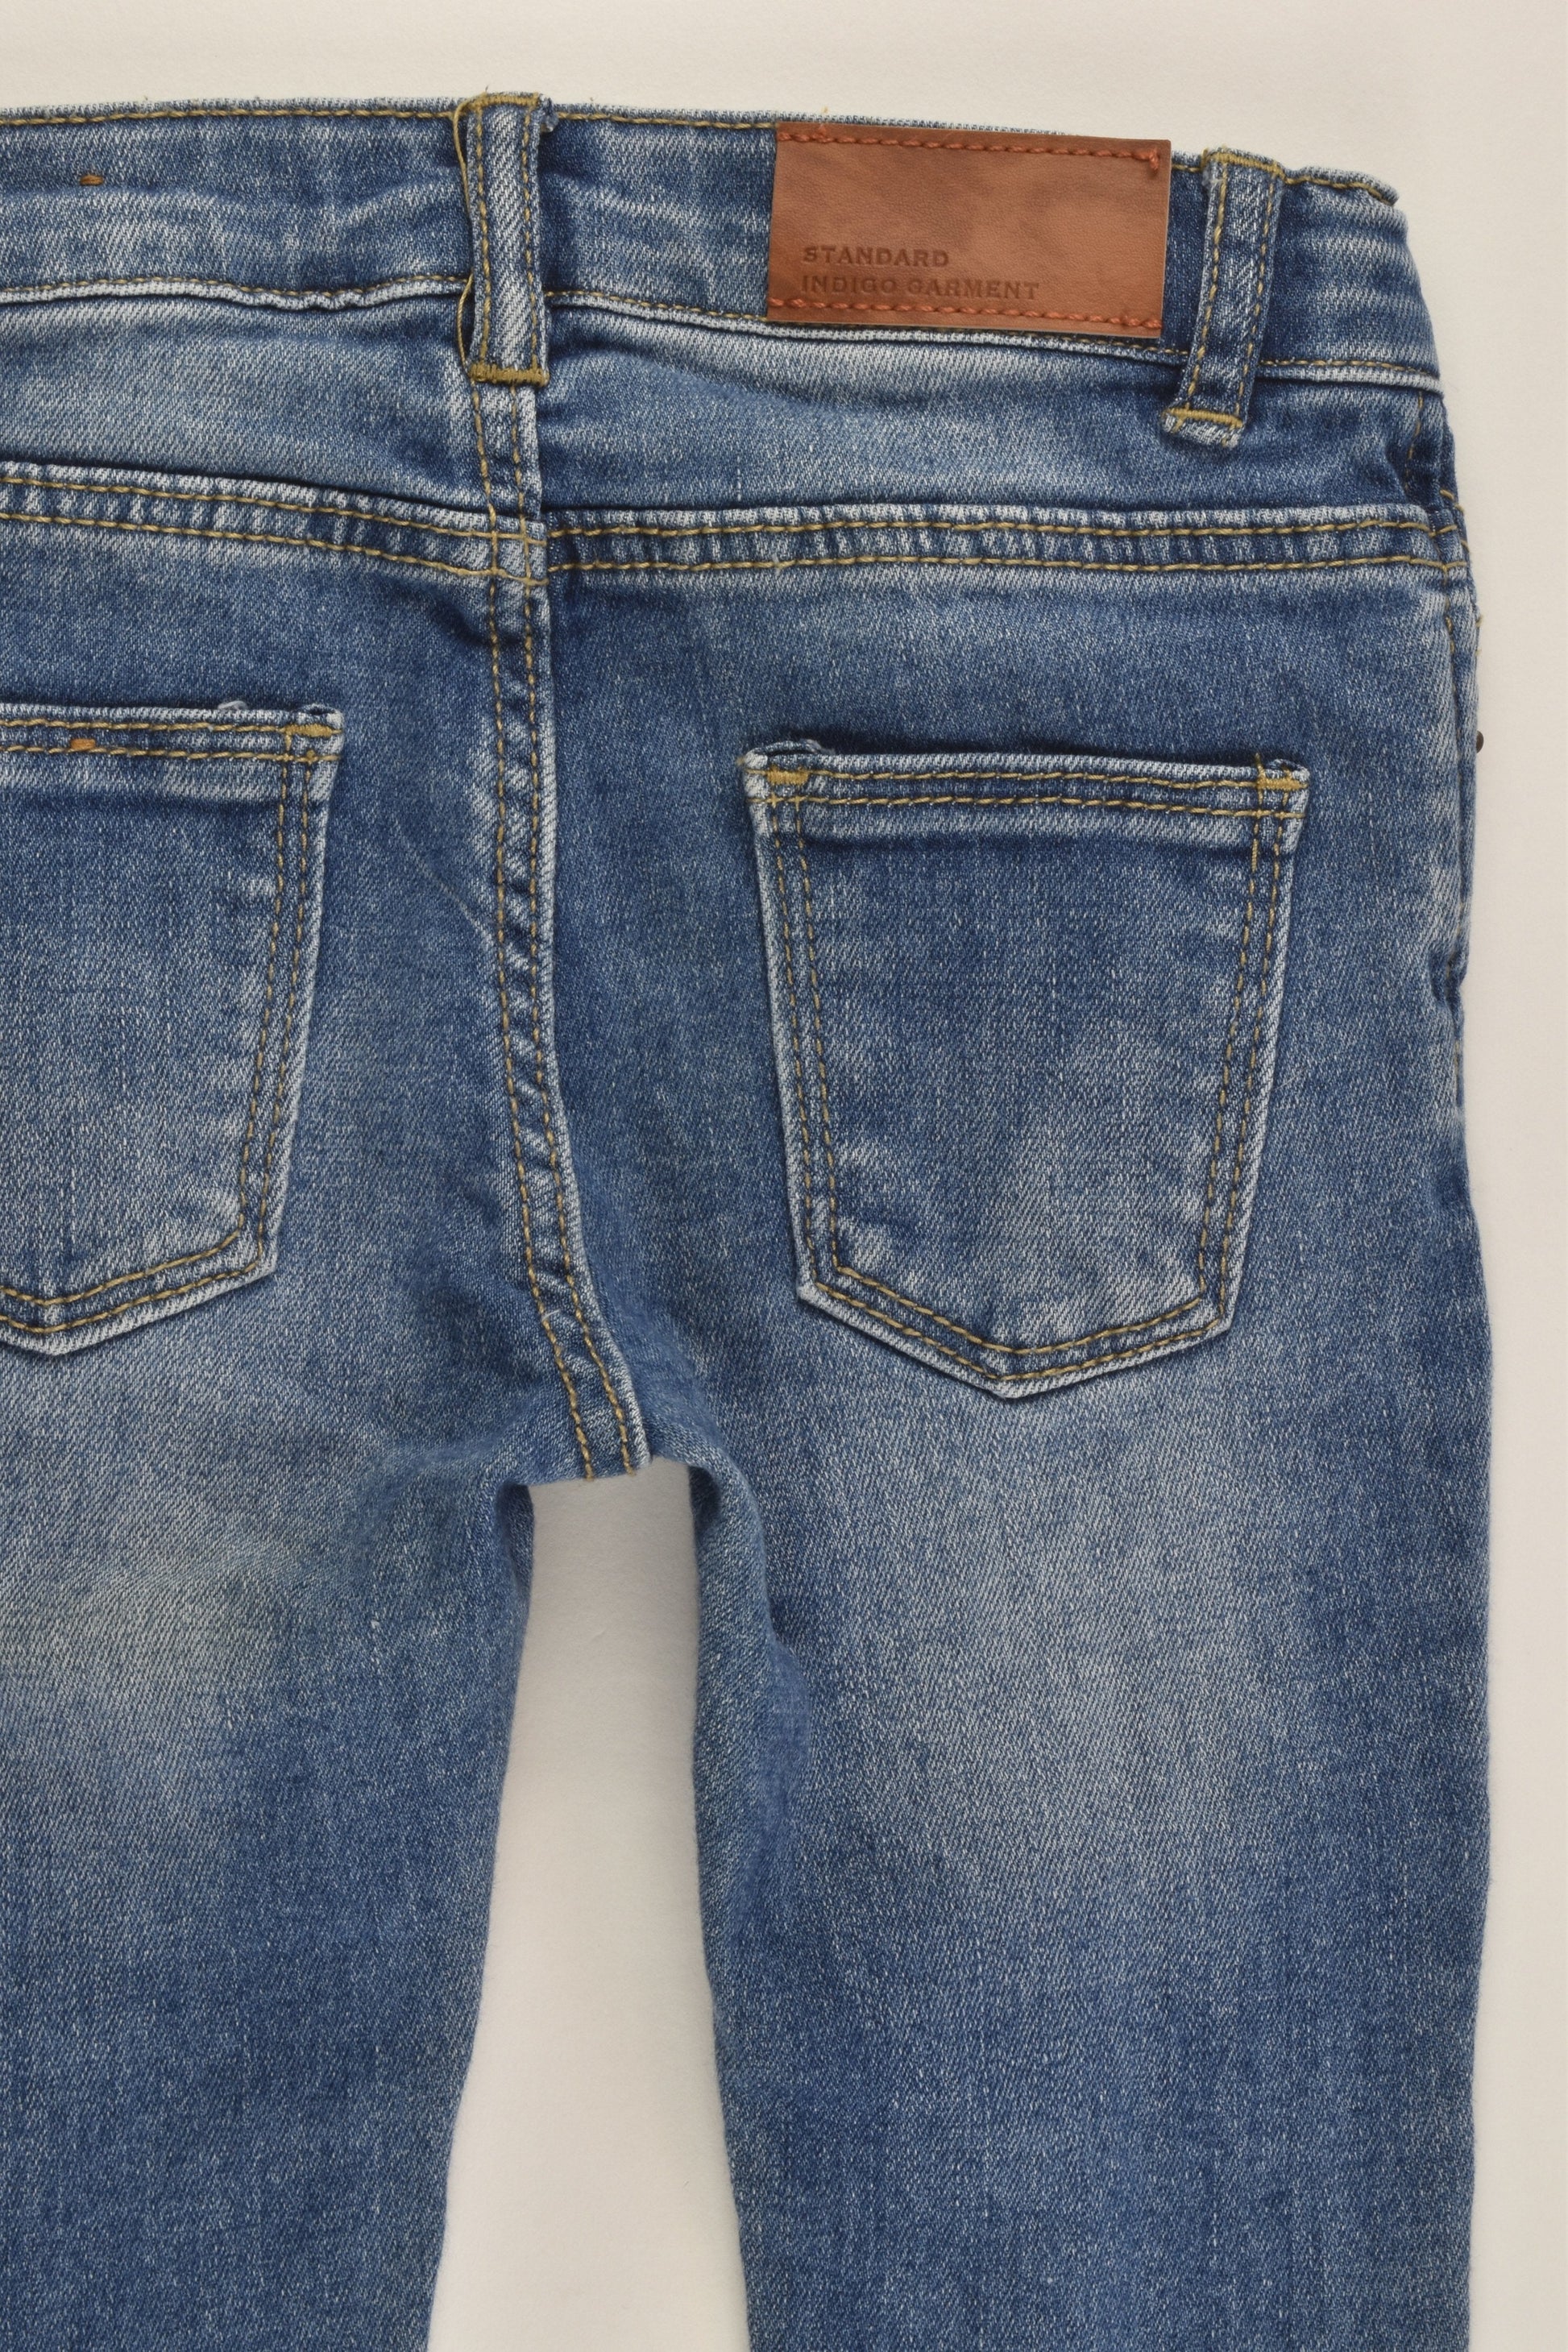 Zara Size 0 (9/12 months, 80 cm) Stretchy Denim Pants